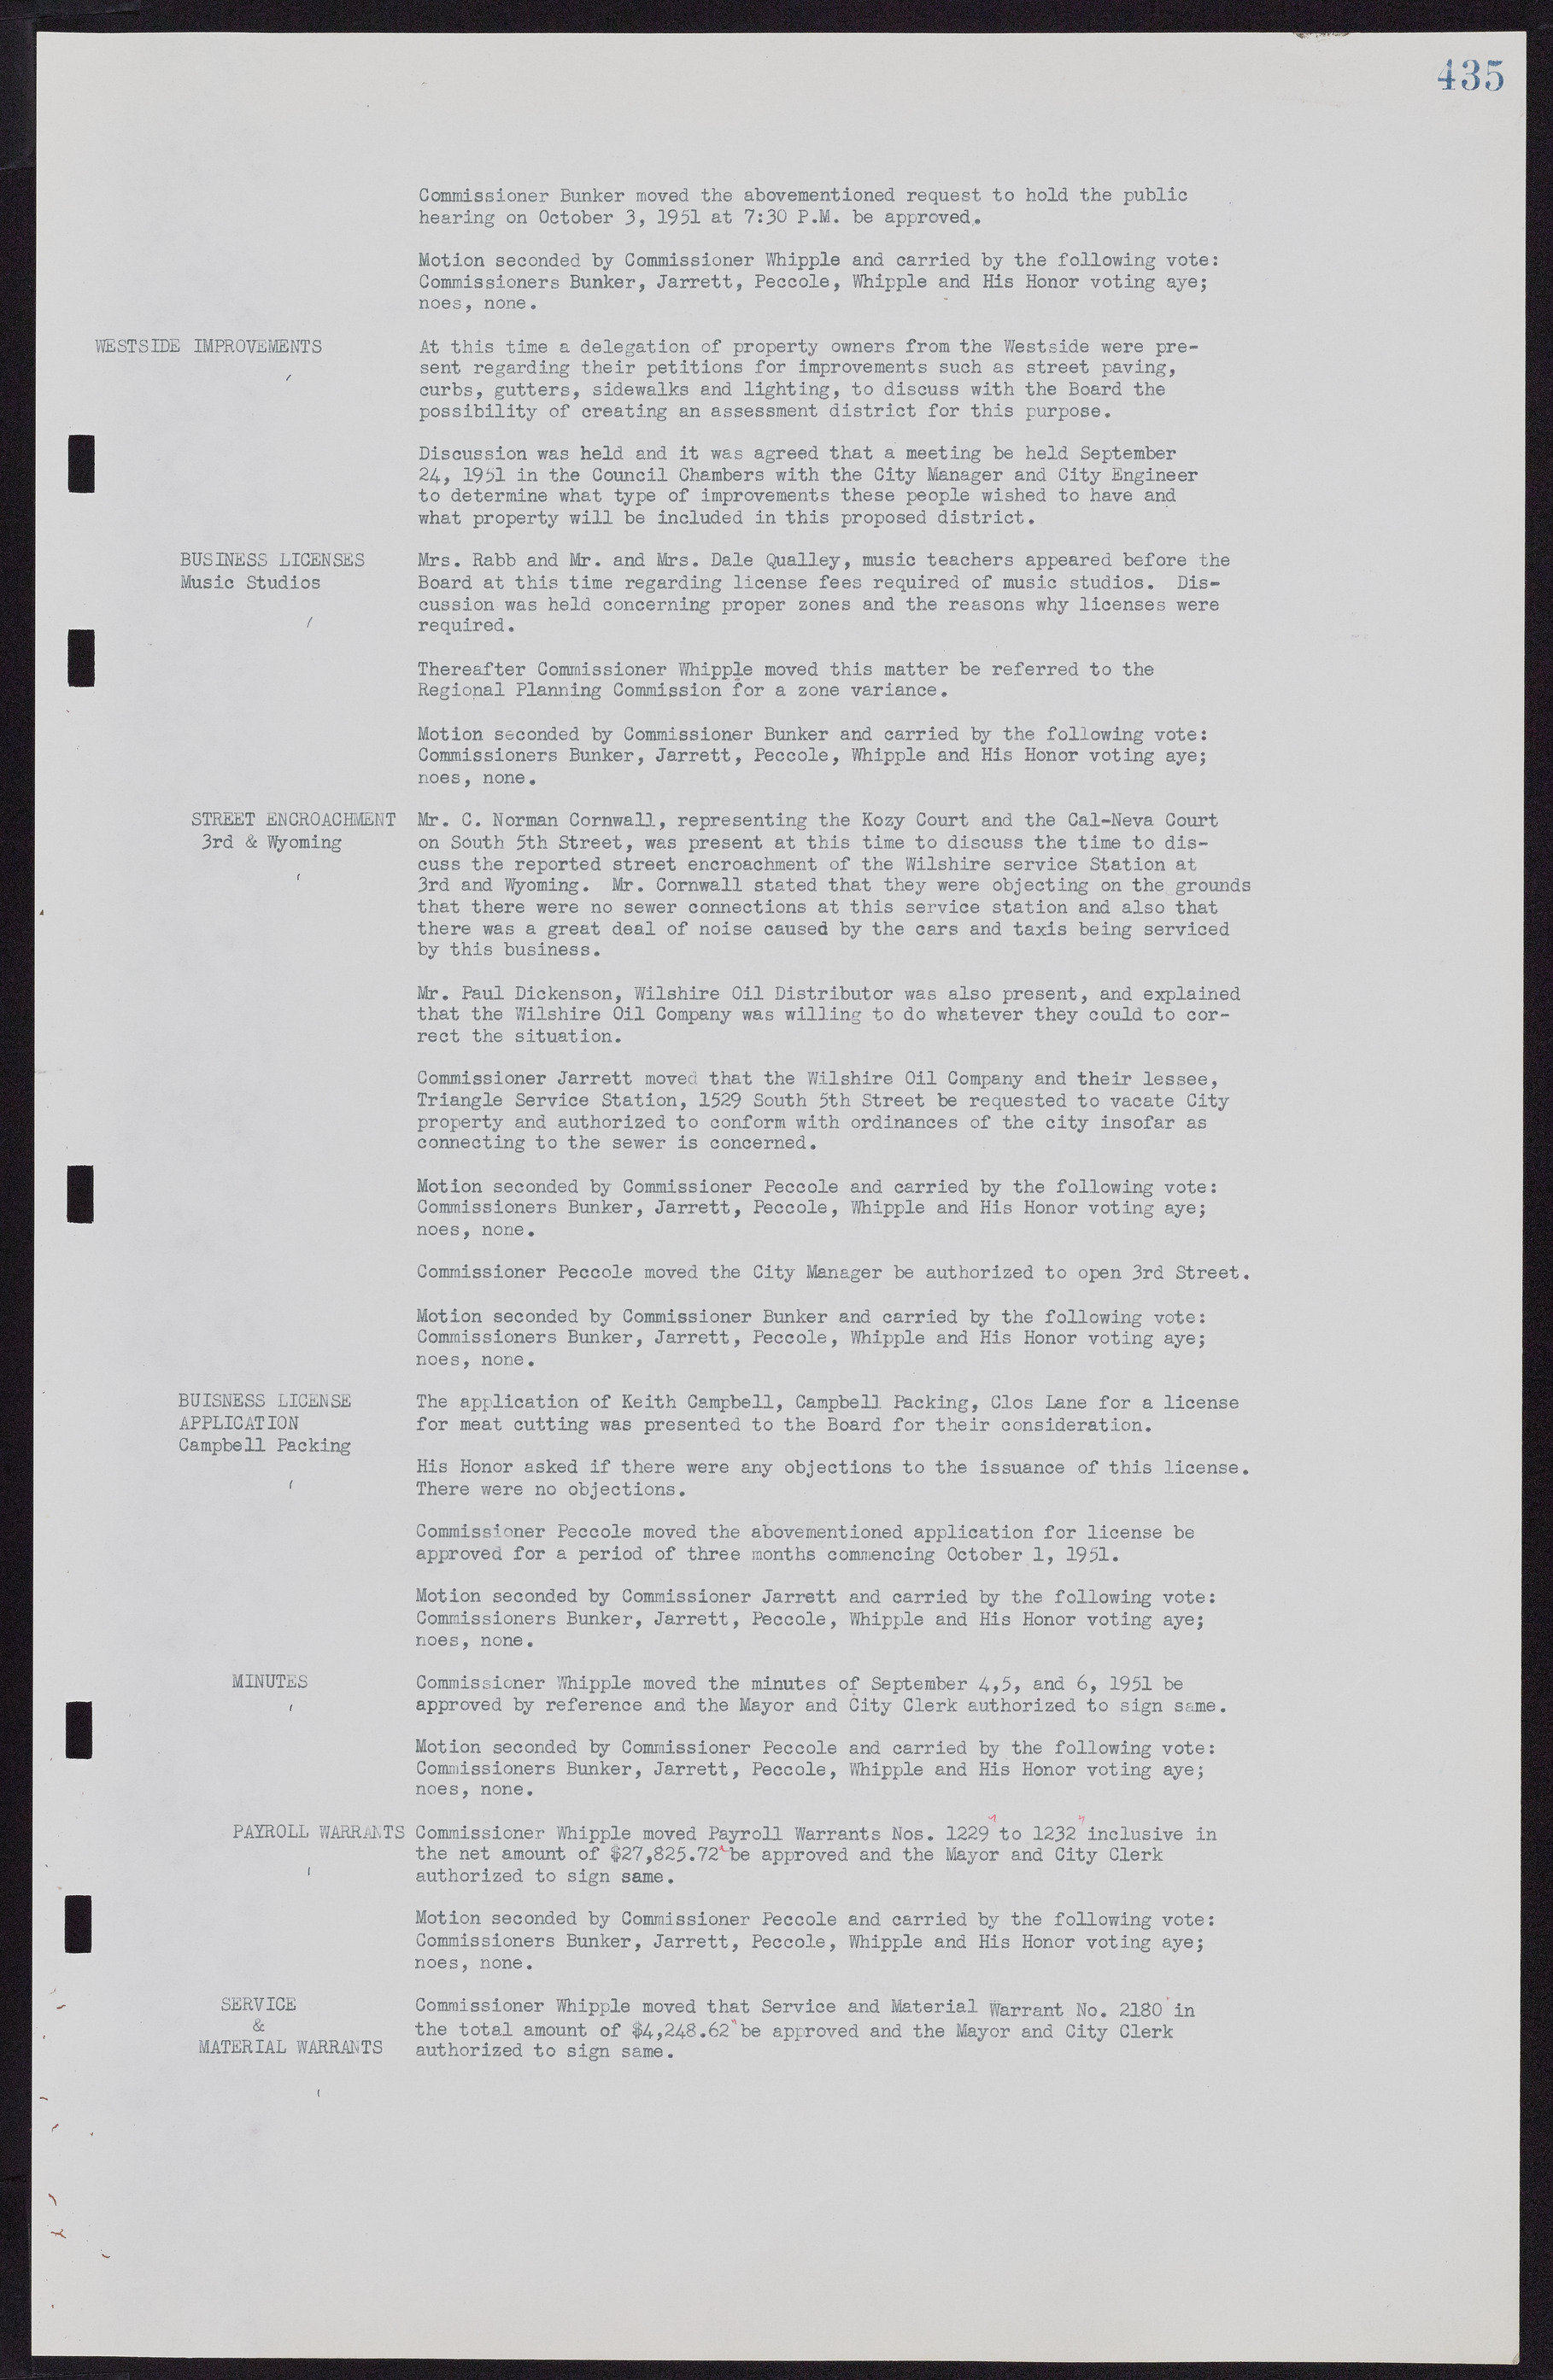 Las Vegas City Commission Minutes, November 7, 1949 to May 21, 1952, lvc000007-451